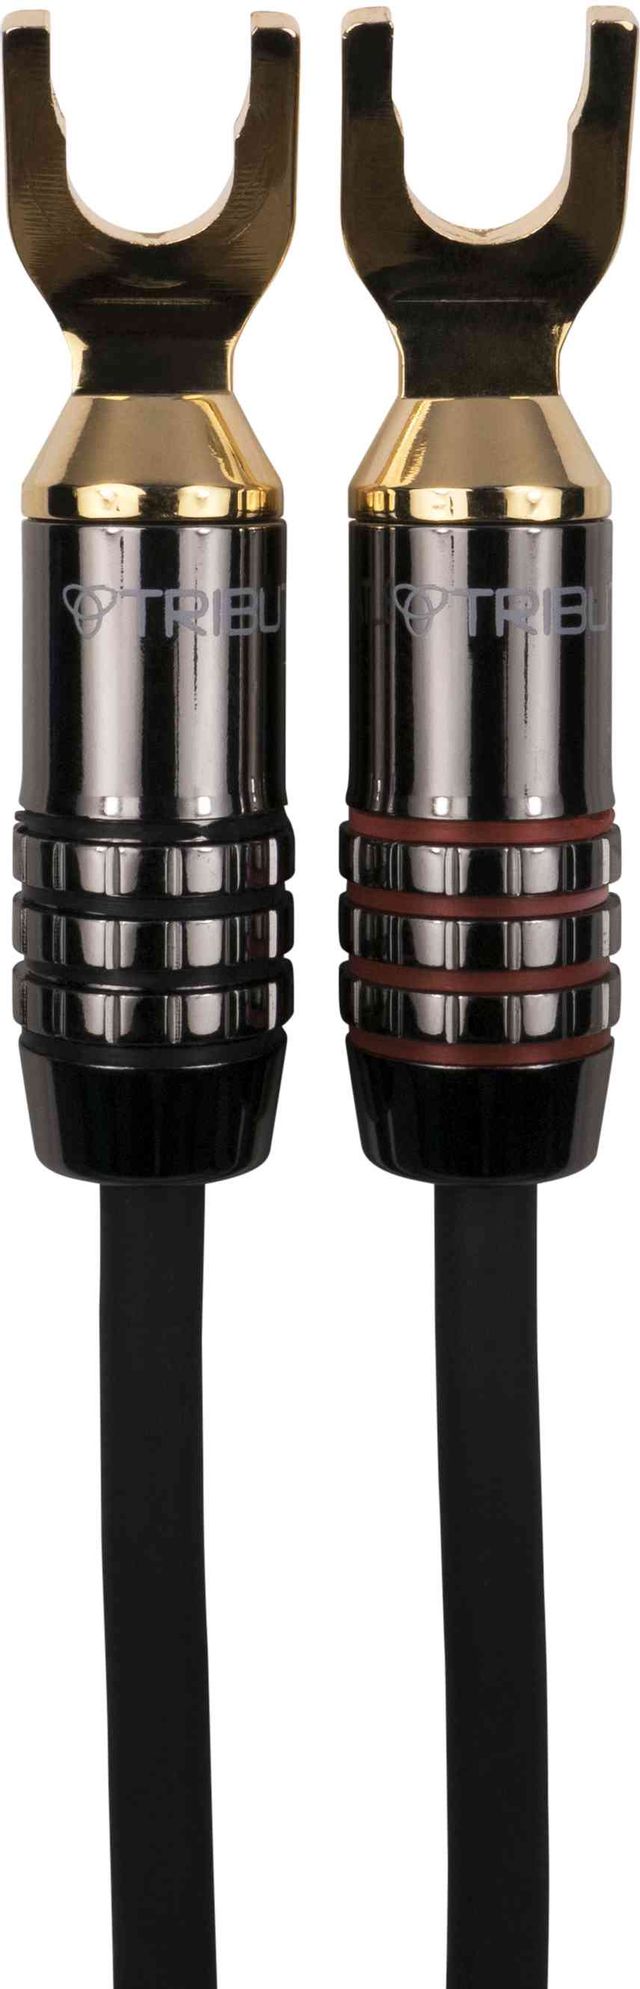 Tributaries® Series 8 10 Ft. Spade Lugs Speaker Cable